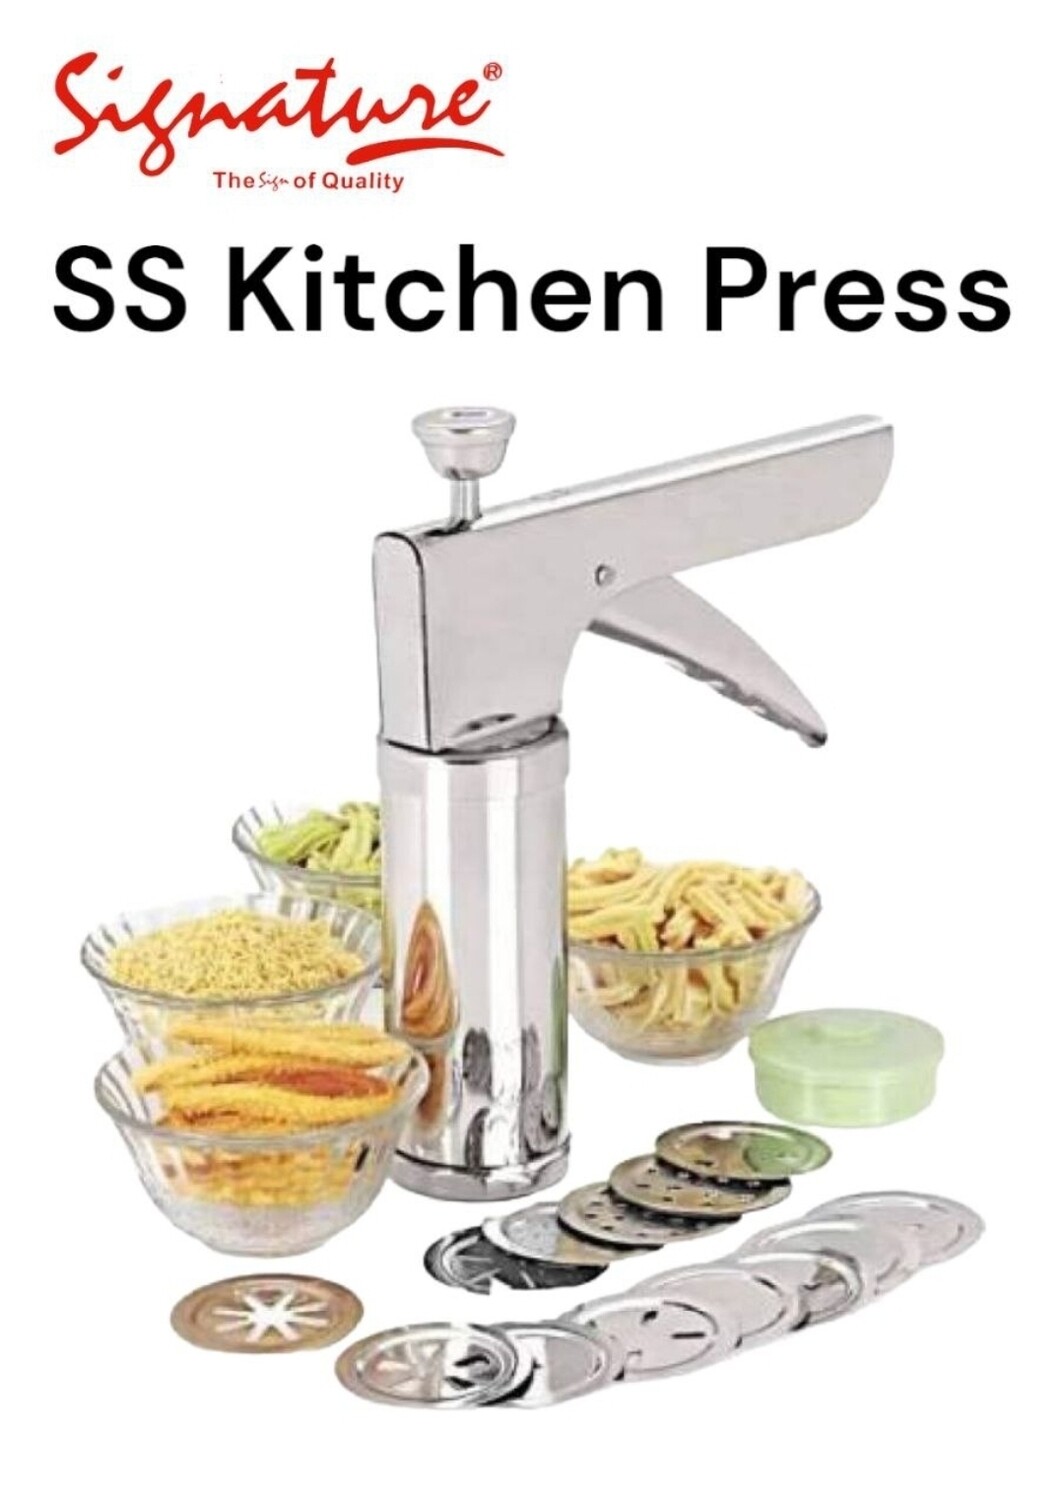 Signature stainless steel kitchen press